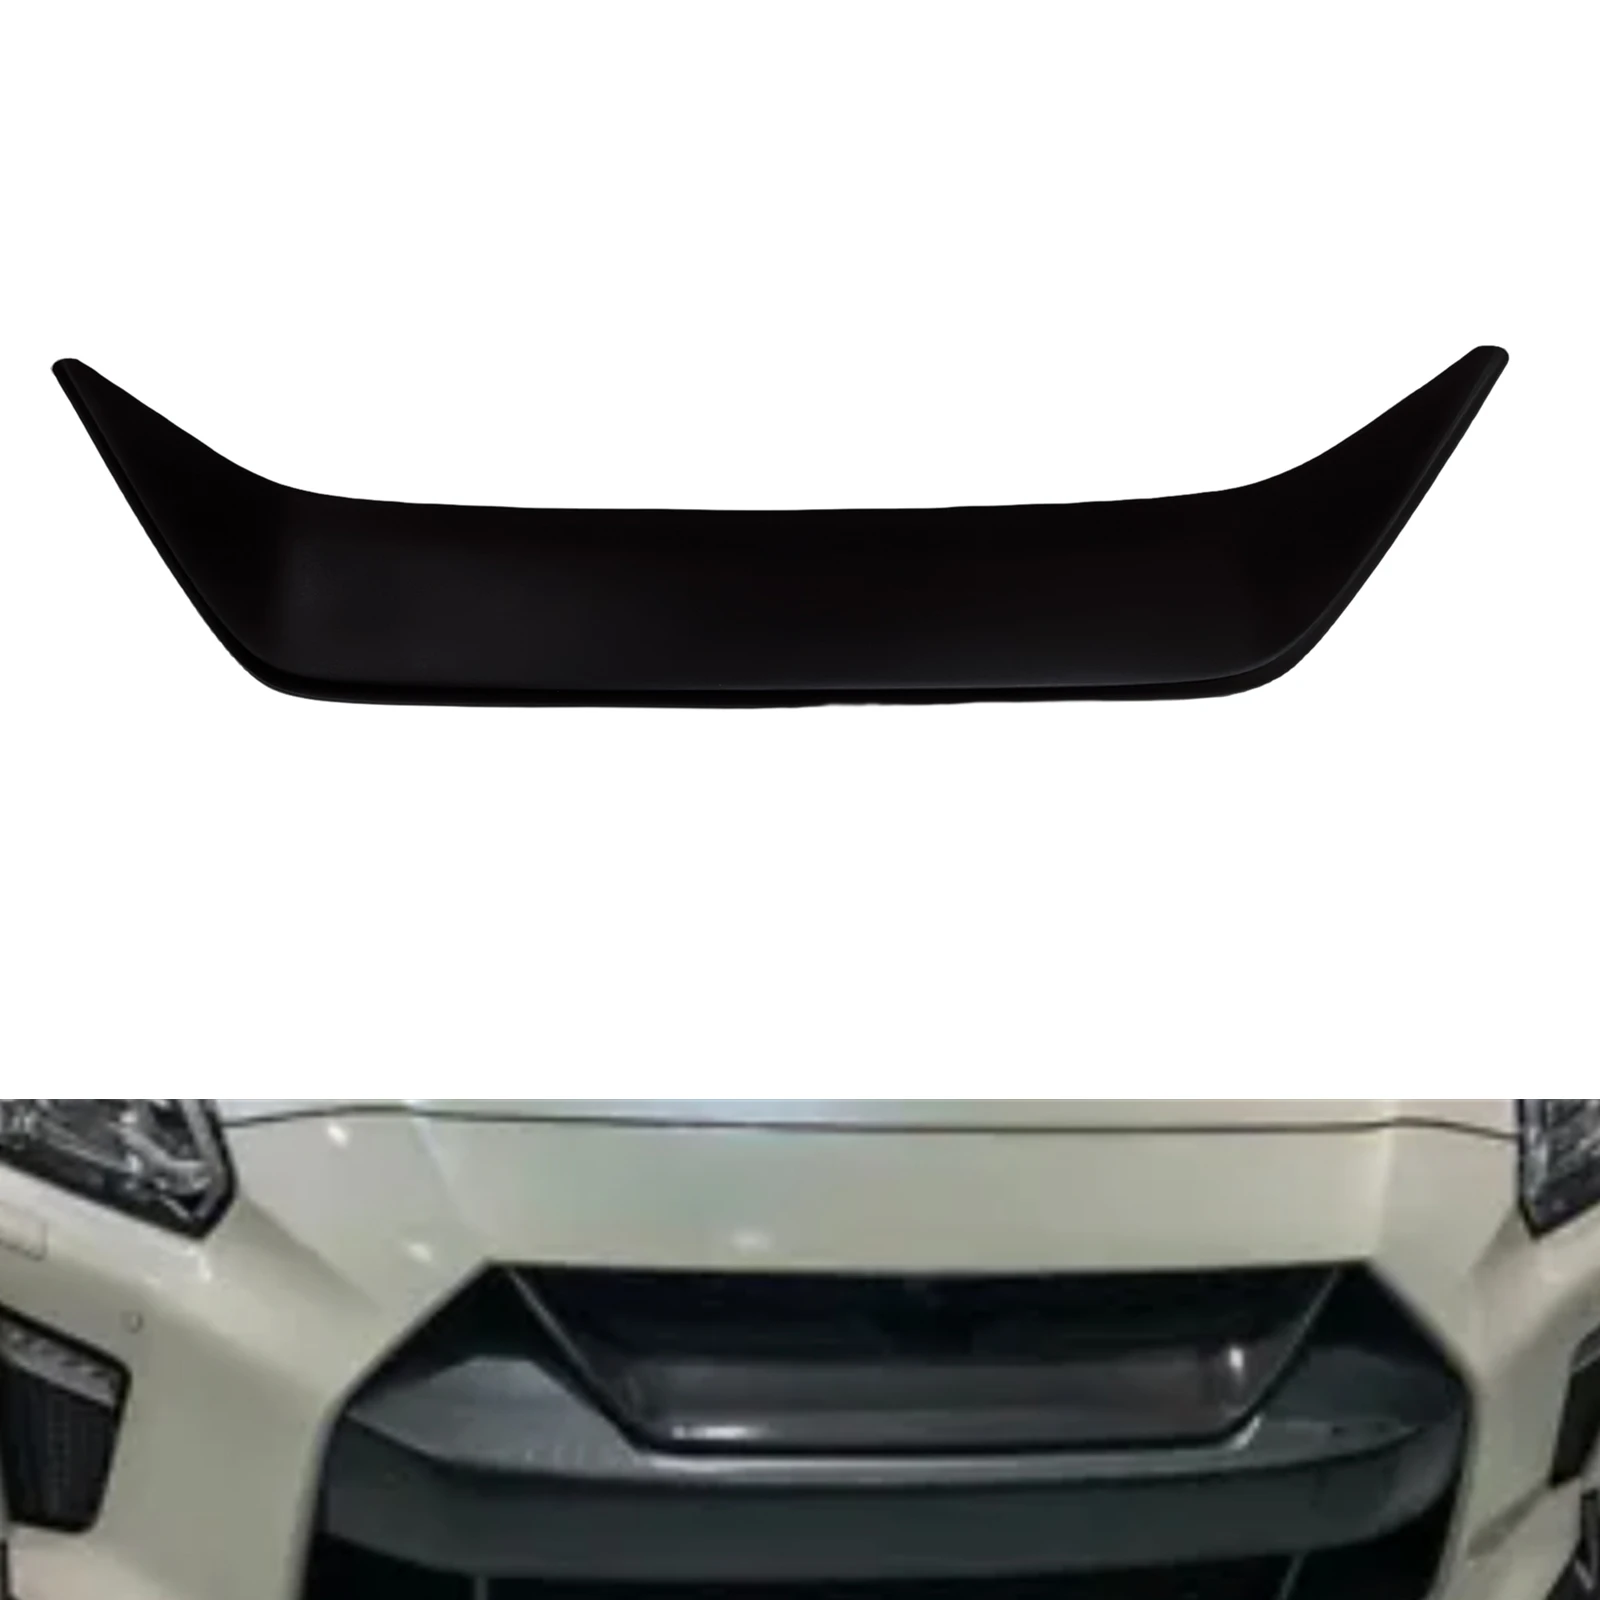 

Grill Front Bumper Grille Cover For Nissan GTR R35 GT-R 2017-2019 Real Carbon Fiber/Fiberglass Upper Hood Mesh Guard Plate Trim